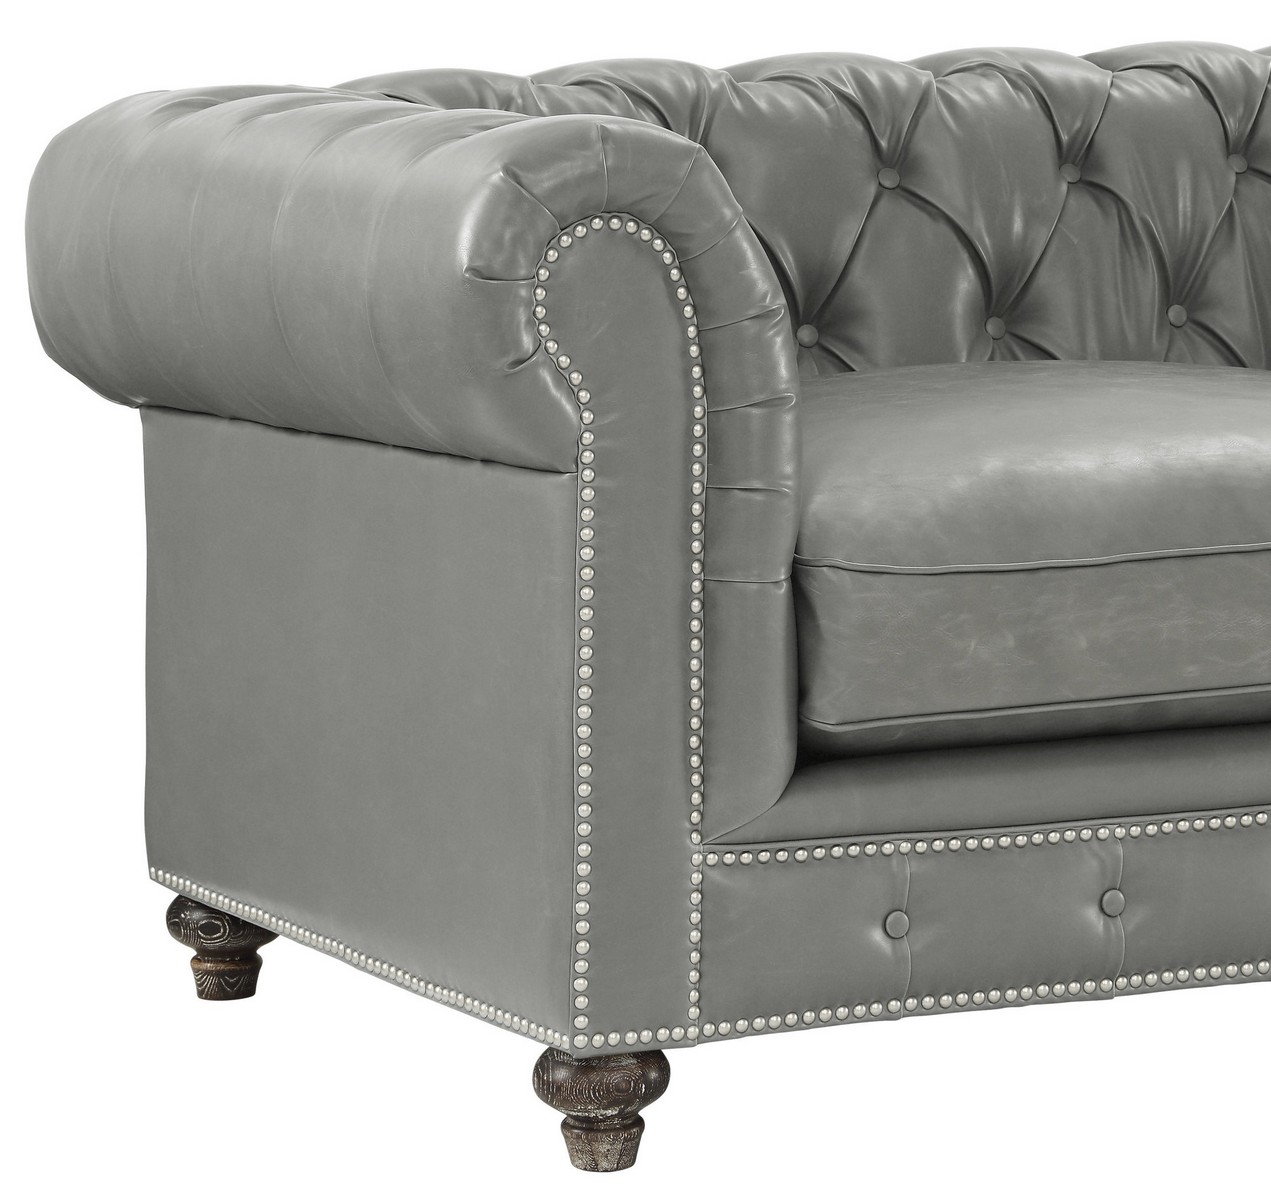 TOV Furniture Durango Rustic Grey Leather Sofa S98 at Homelement.com